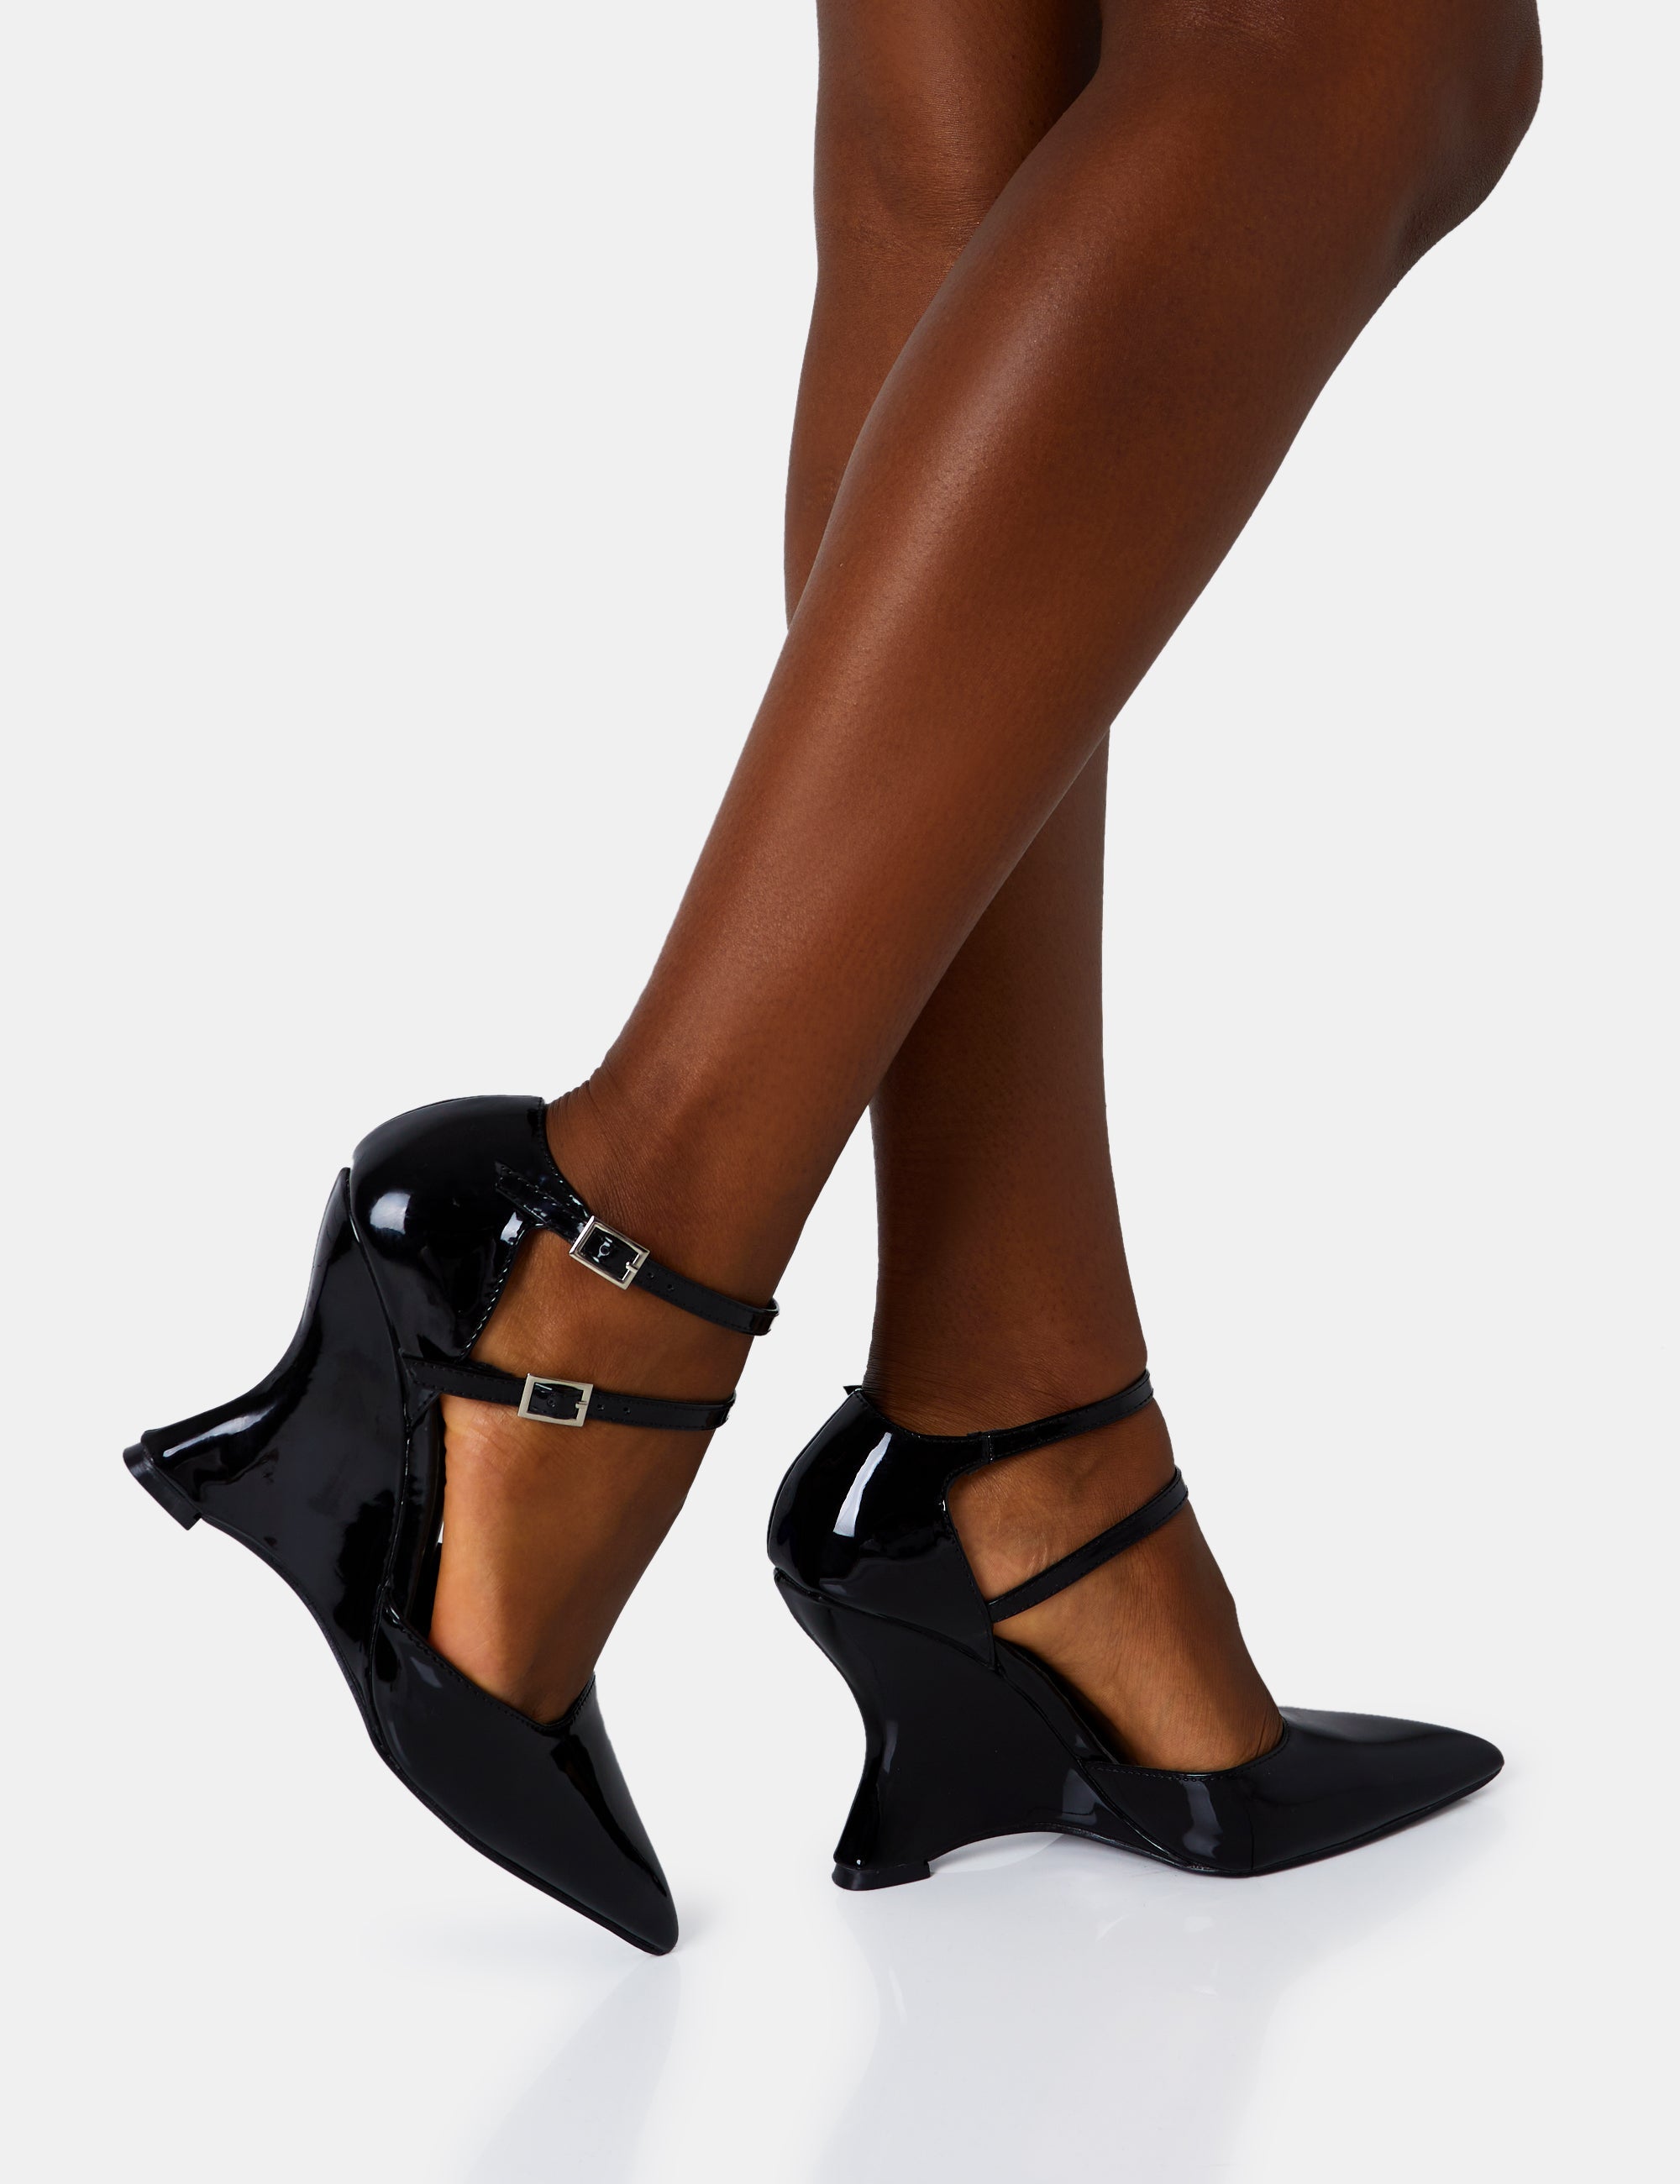 Buy Schutz Dual T-Strap High Heel Black Stilettos 8 UK (41 EU) at Amazon.in